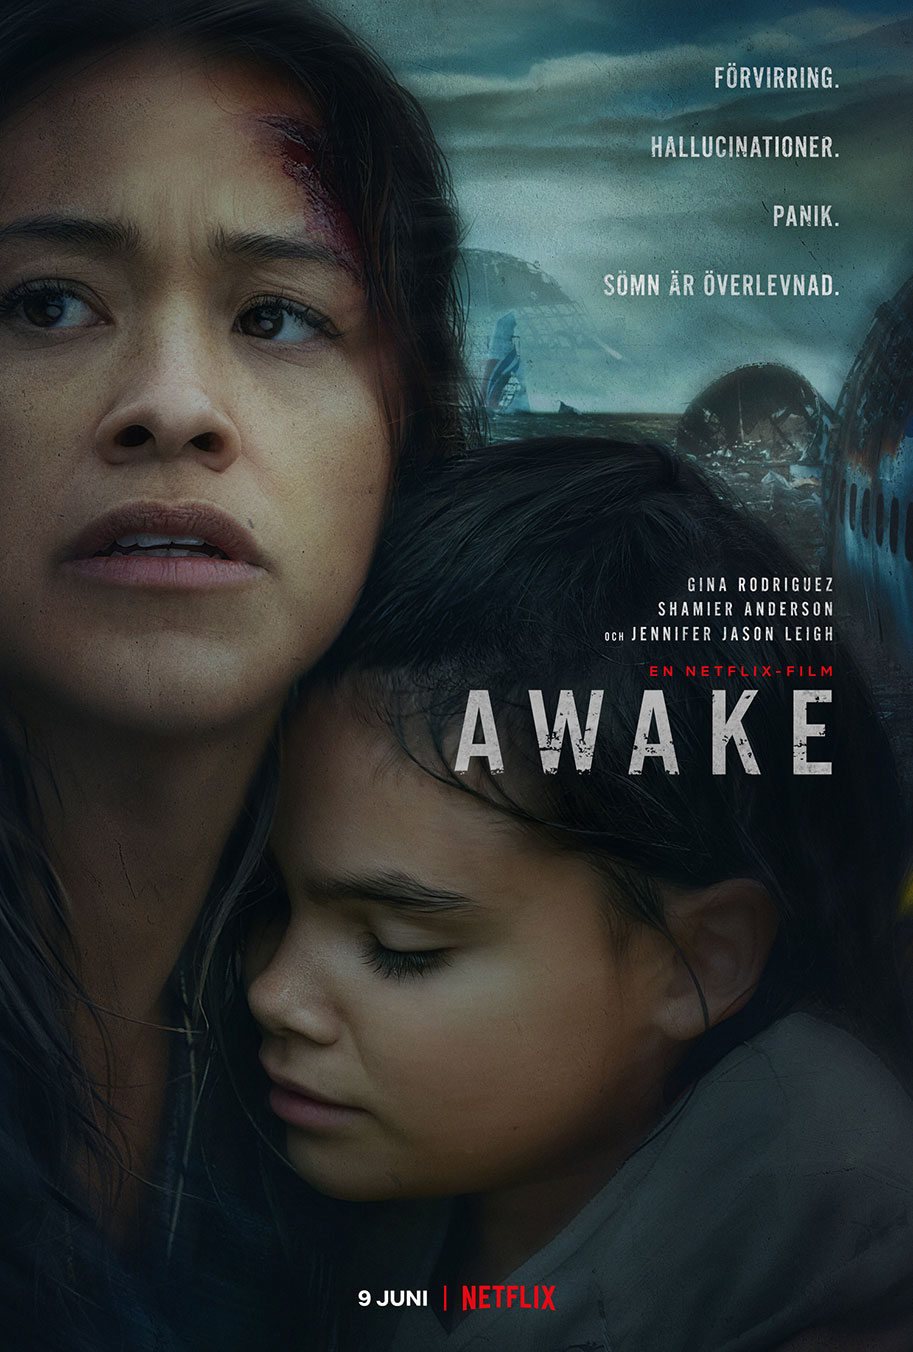 Awake, Gina Rodriguez, Netflix, thriller